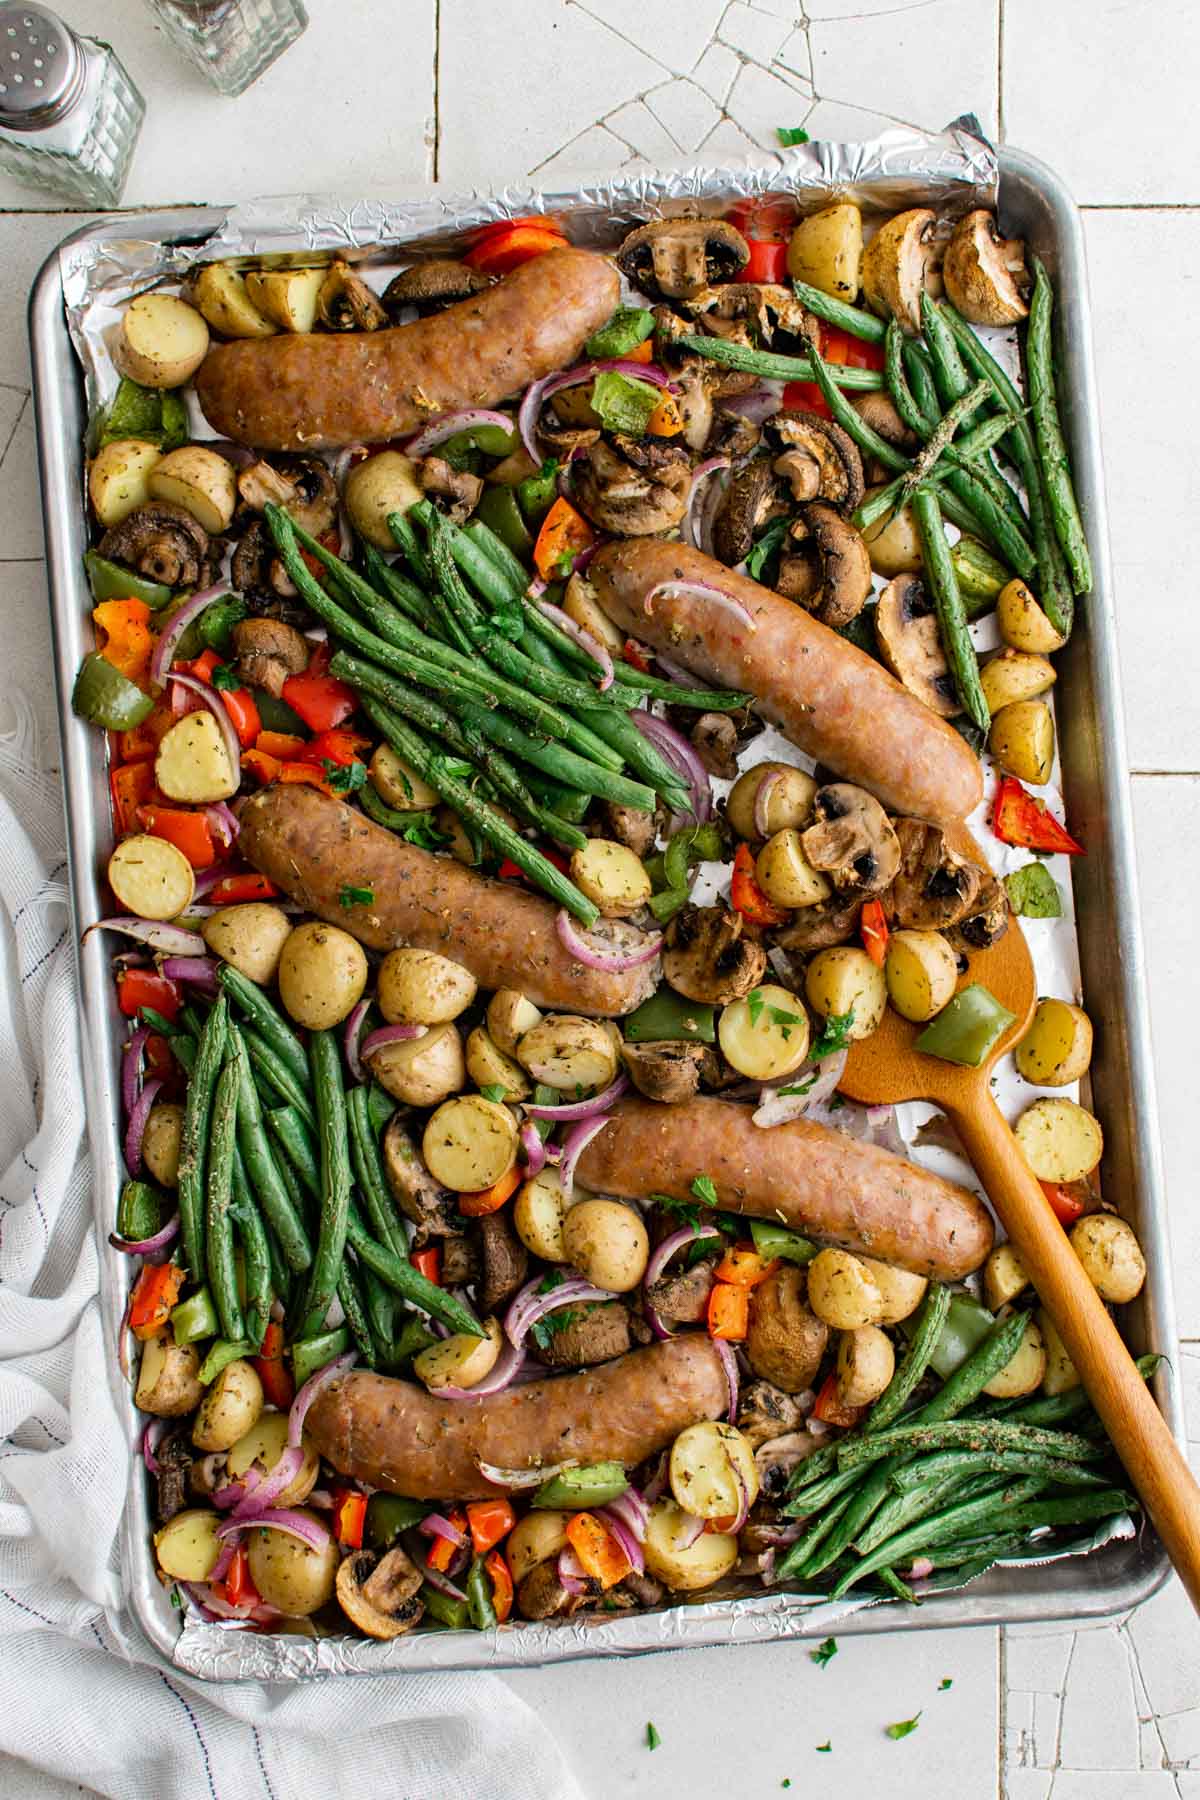 sheet pan with sausages and veggies